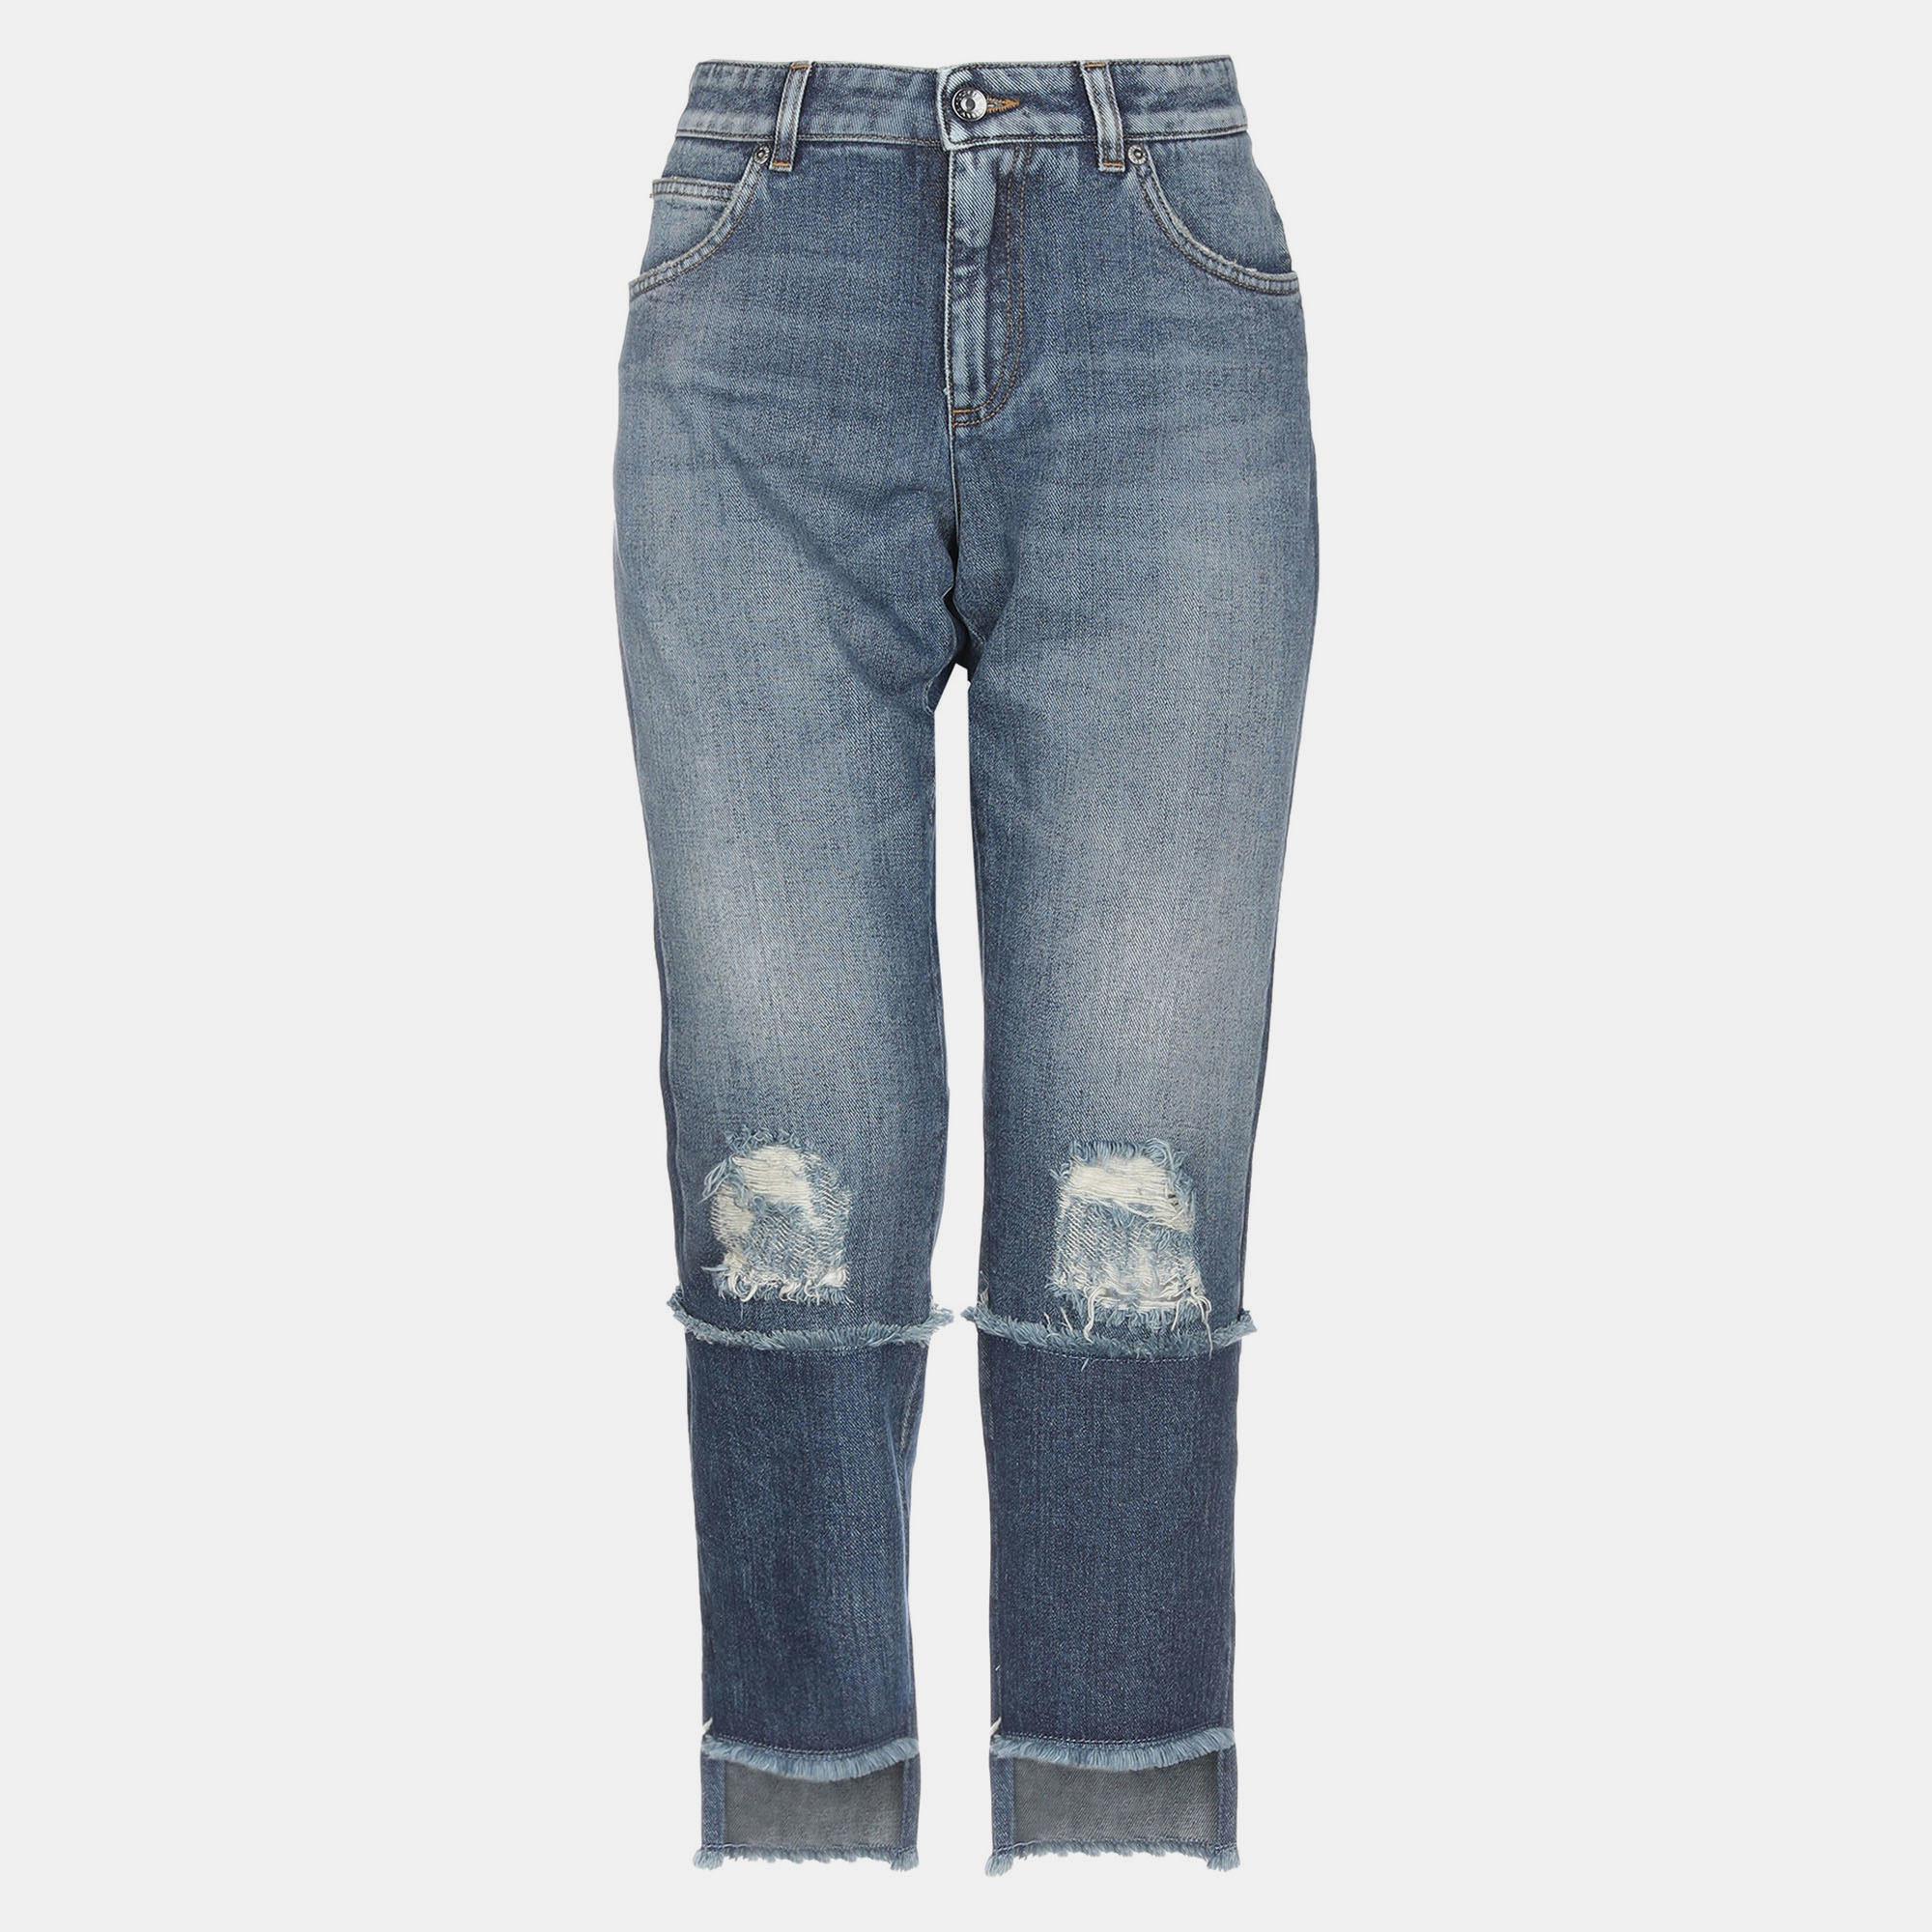 Dolce & gabbana cotton jeans 40